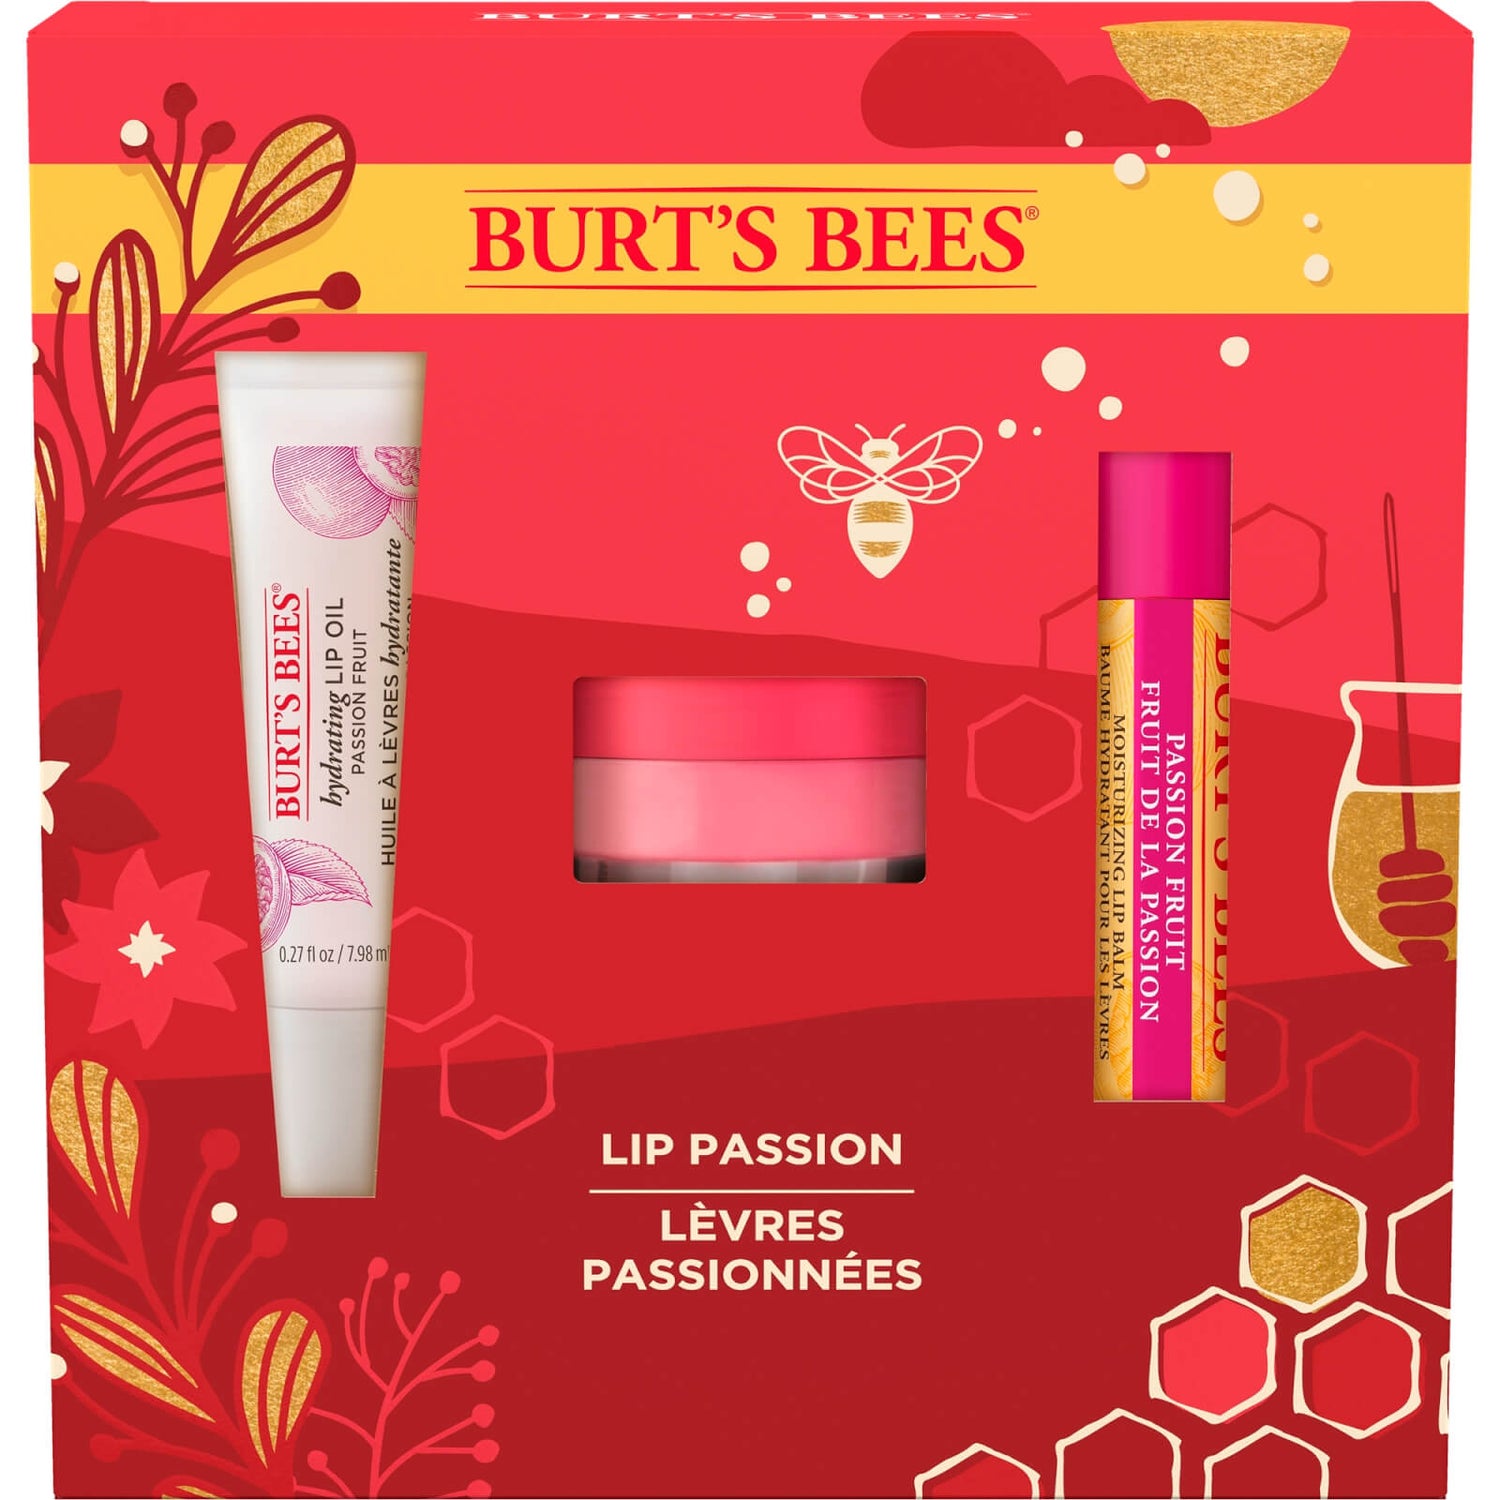 Burt's Bees Lip Passion Gift Set